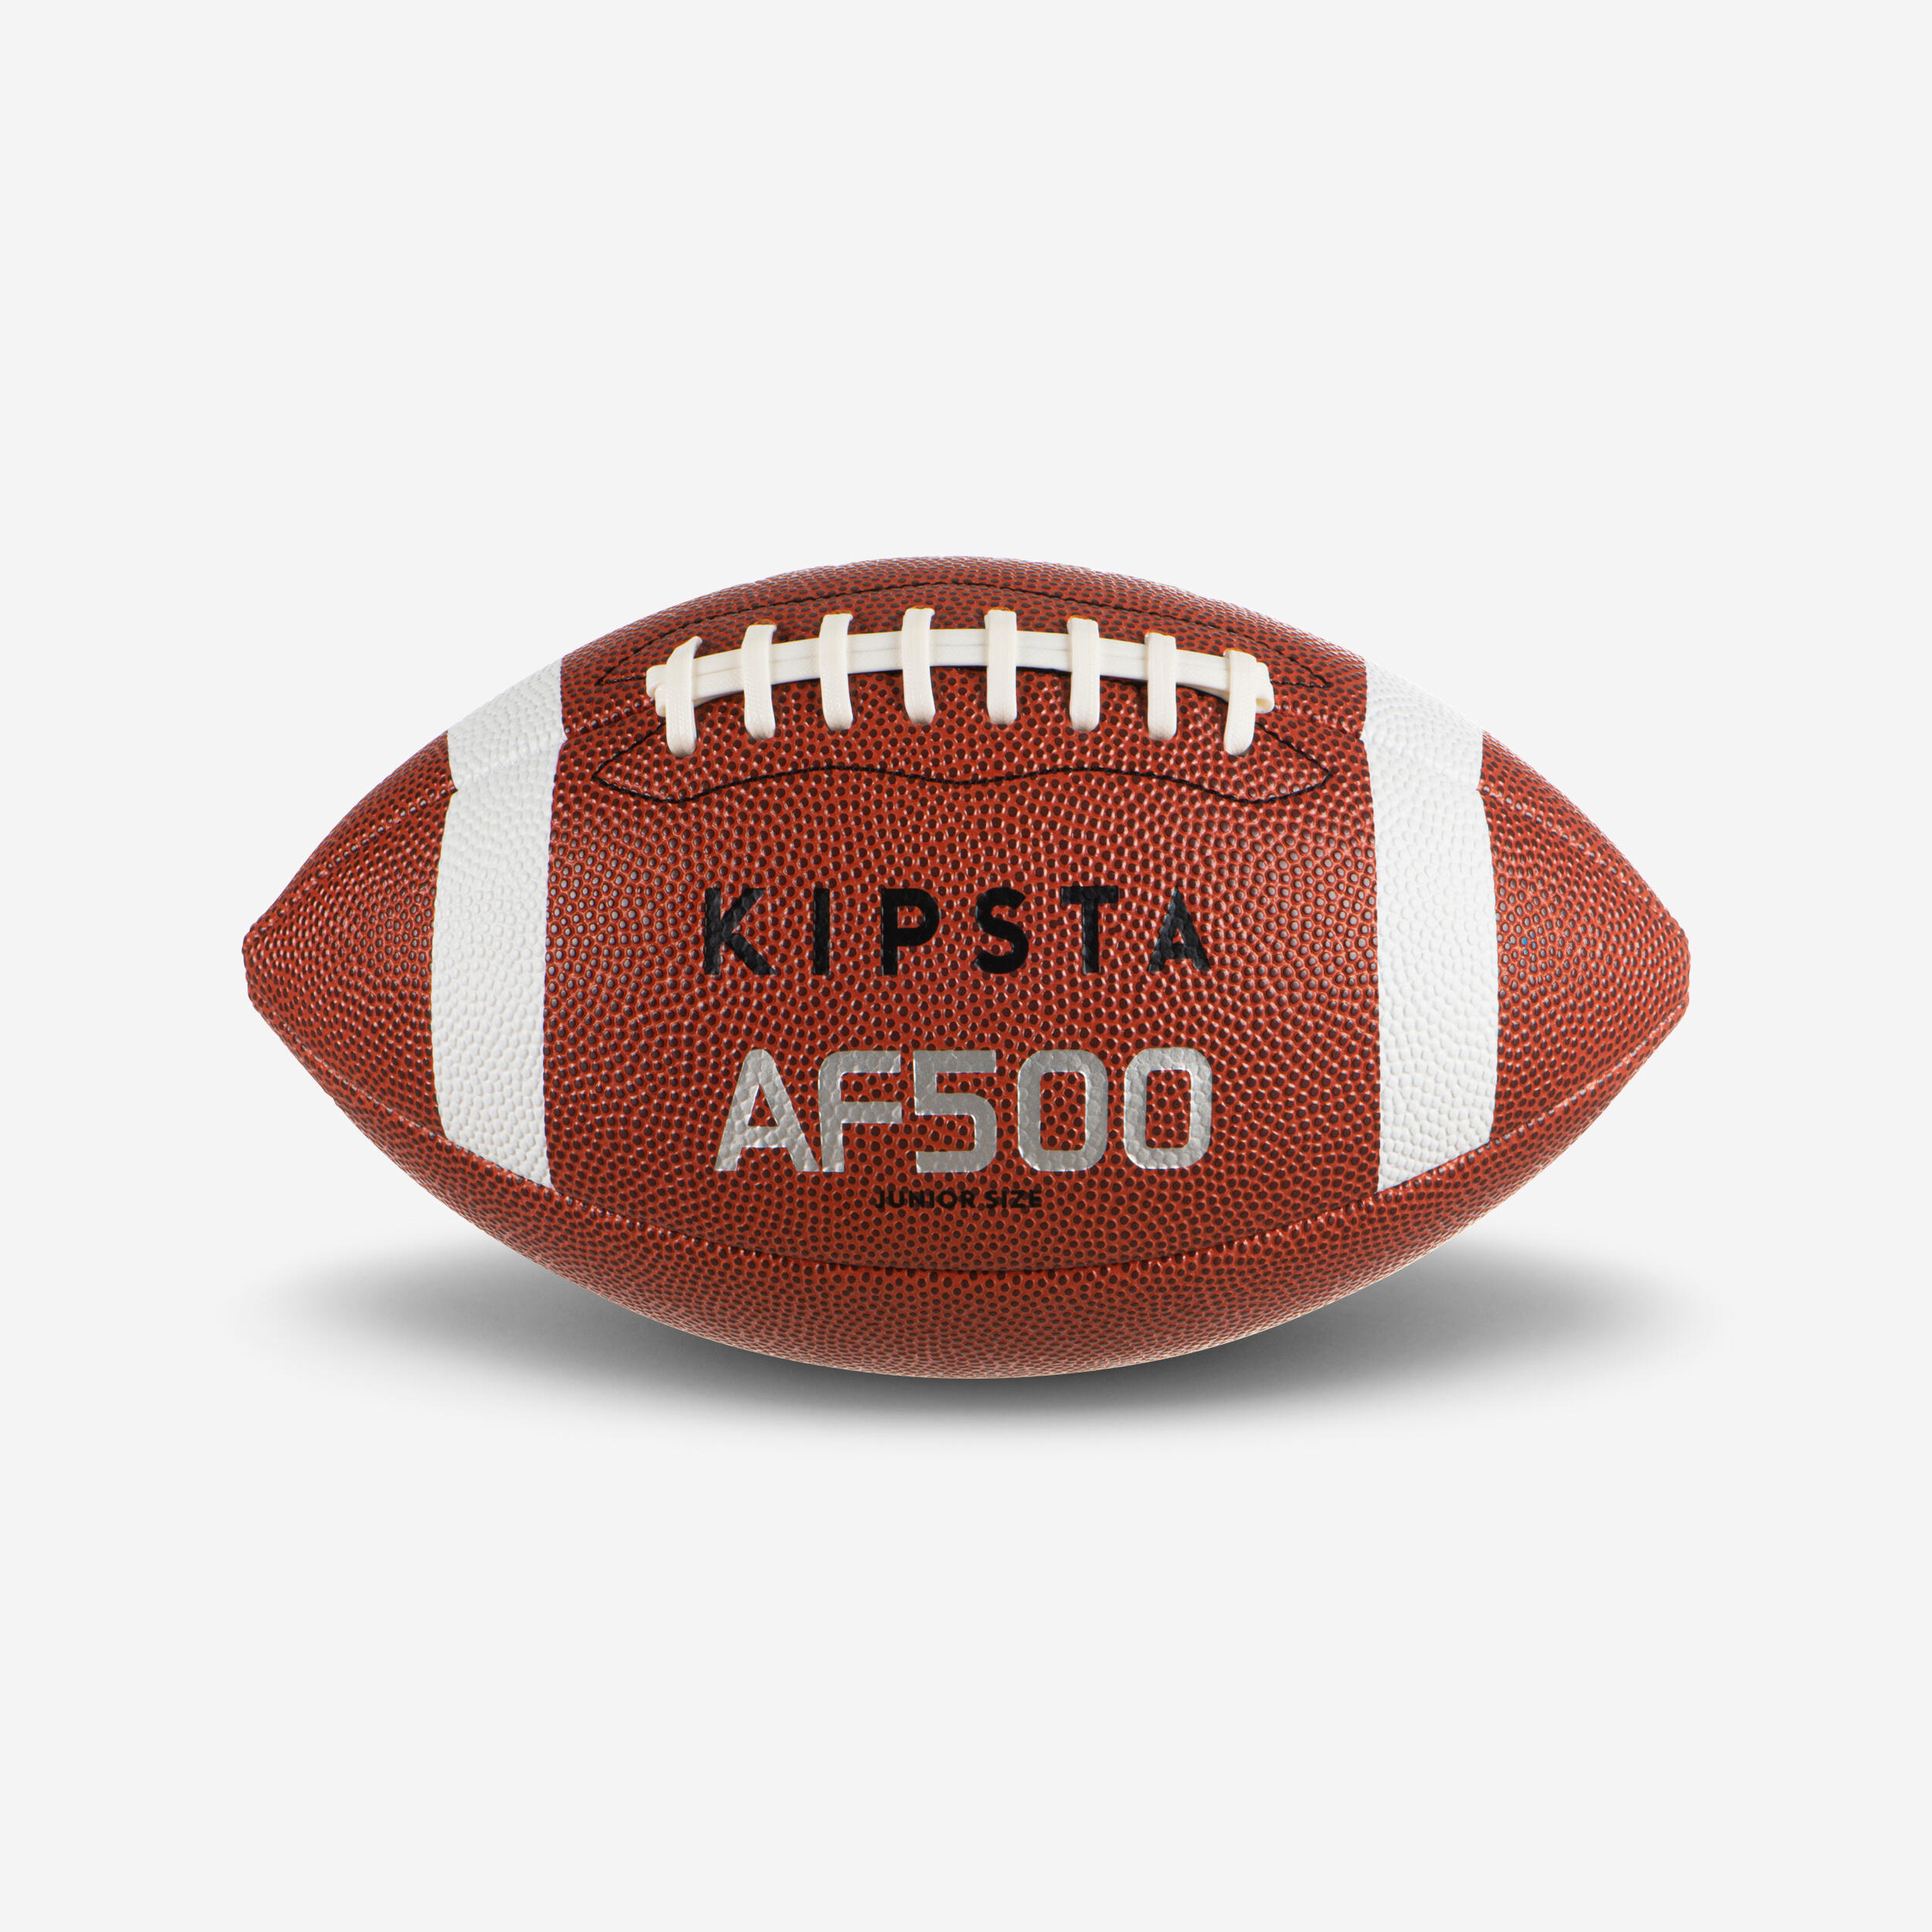 KIPSTA Kids' Junior Size American Football AF500 - Brown